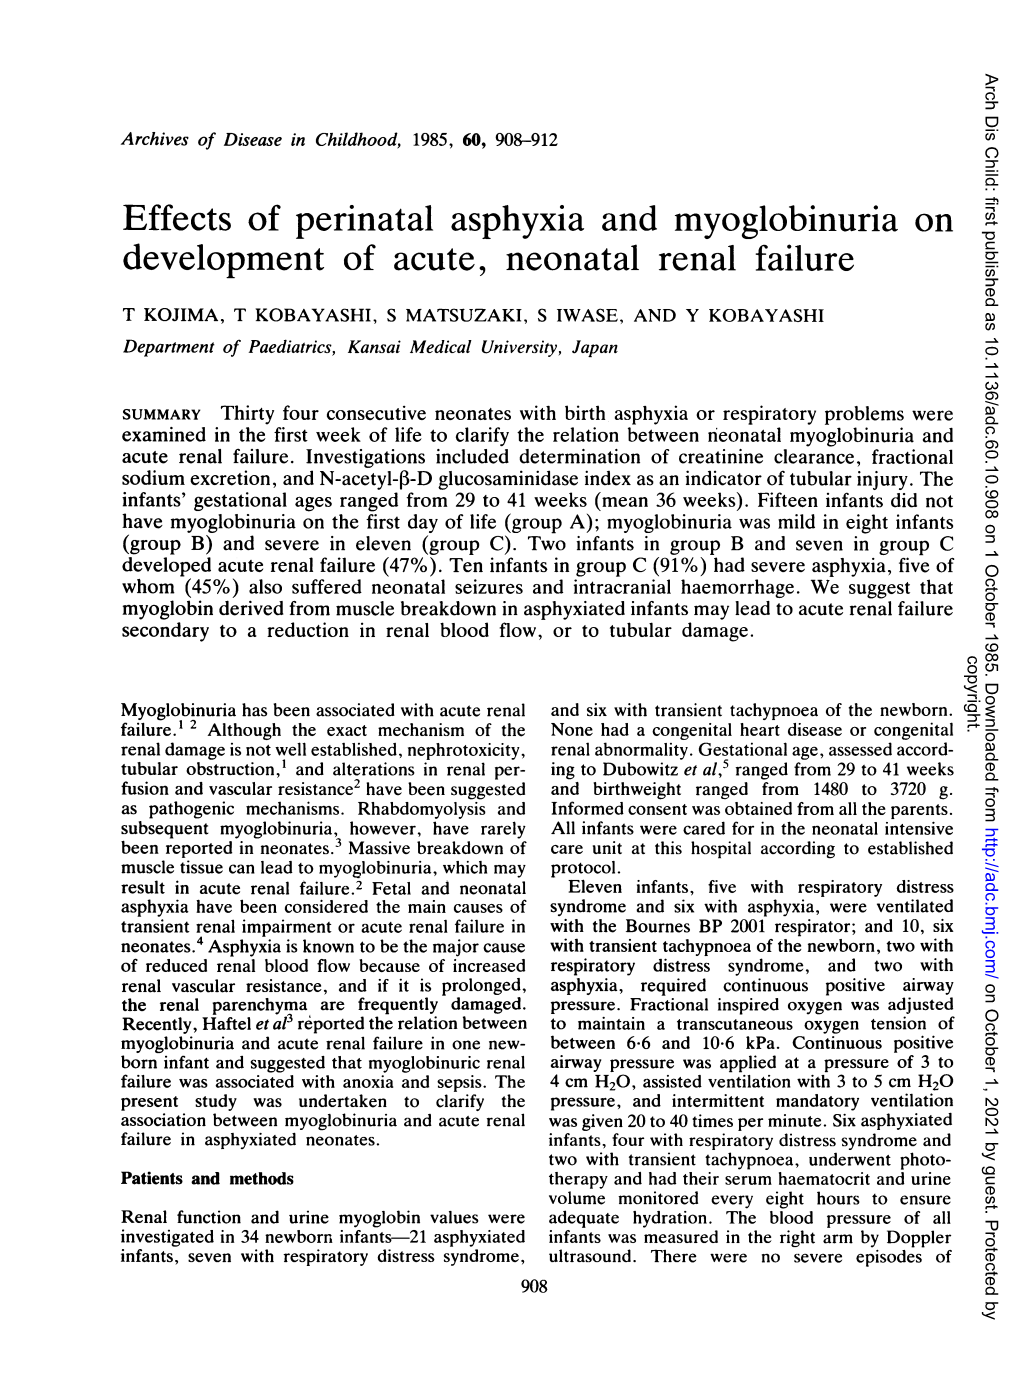 Effects of Perinatal Asphyxia and Myoglobinuria on Development of Acute, Neonatal Renal Failure